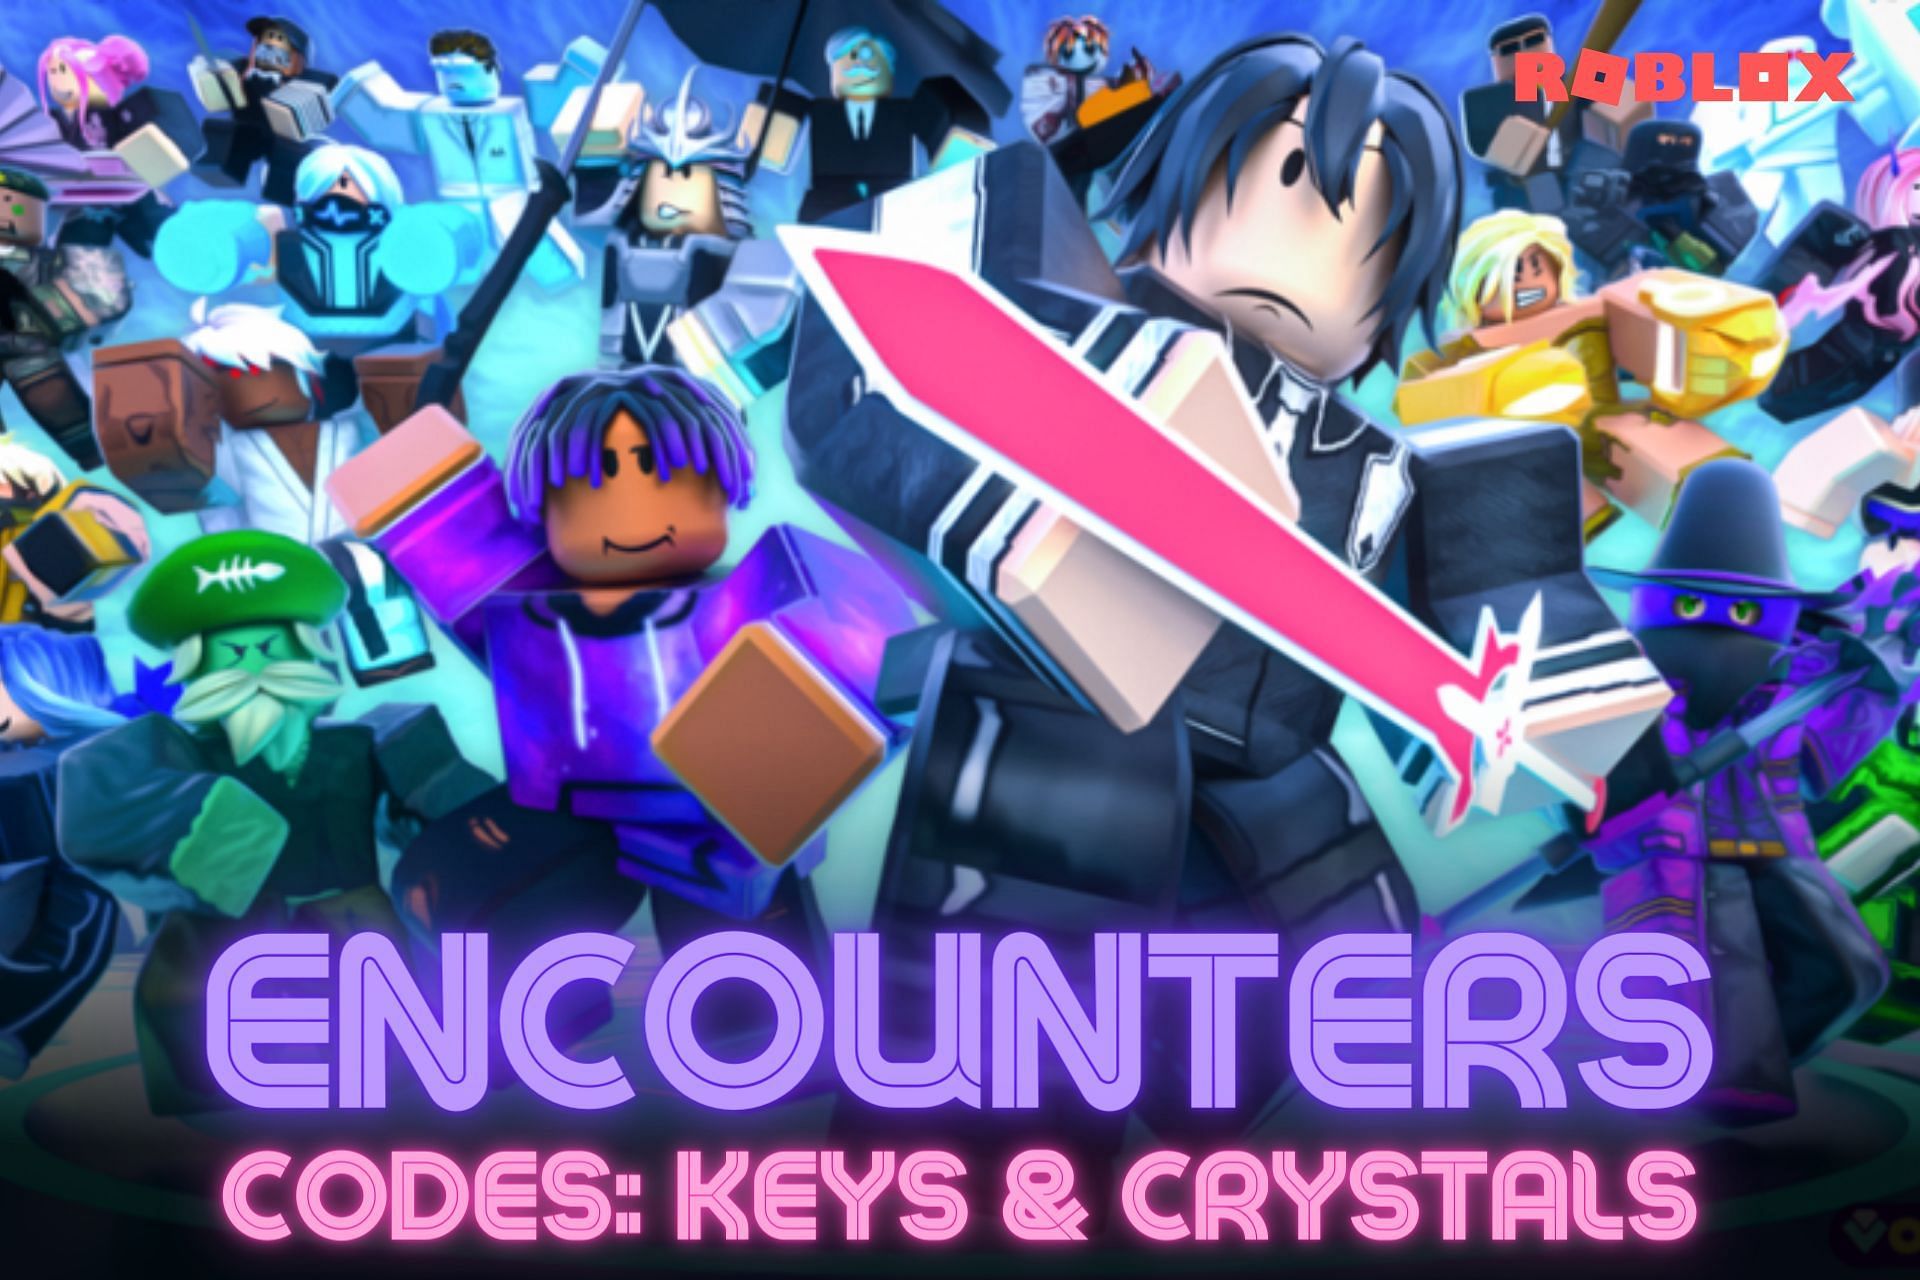 Roblox Encounters Codes for November 2022 : Keys and Crystals